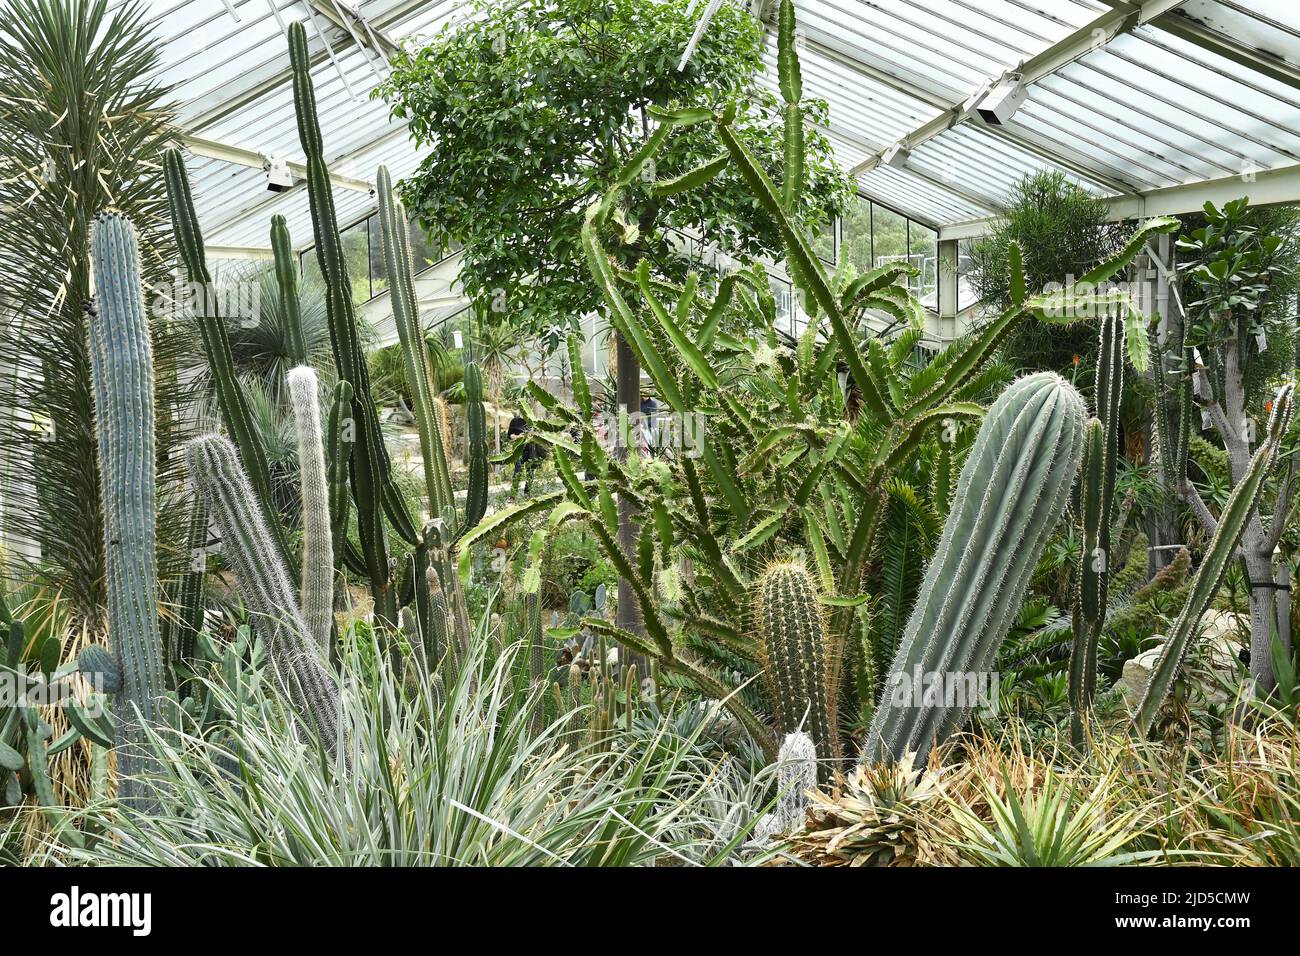 Cacti garden, Princess of Wales Conservatory Kew London UK. Stock Photo